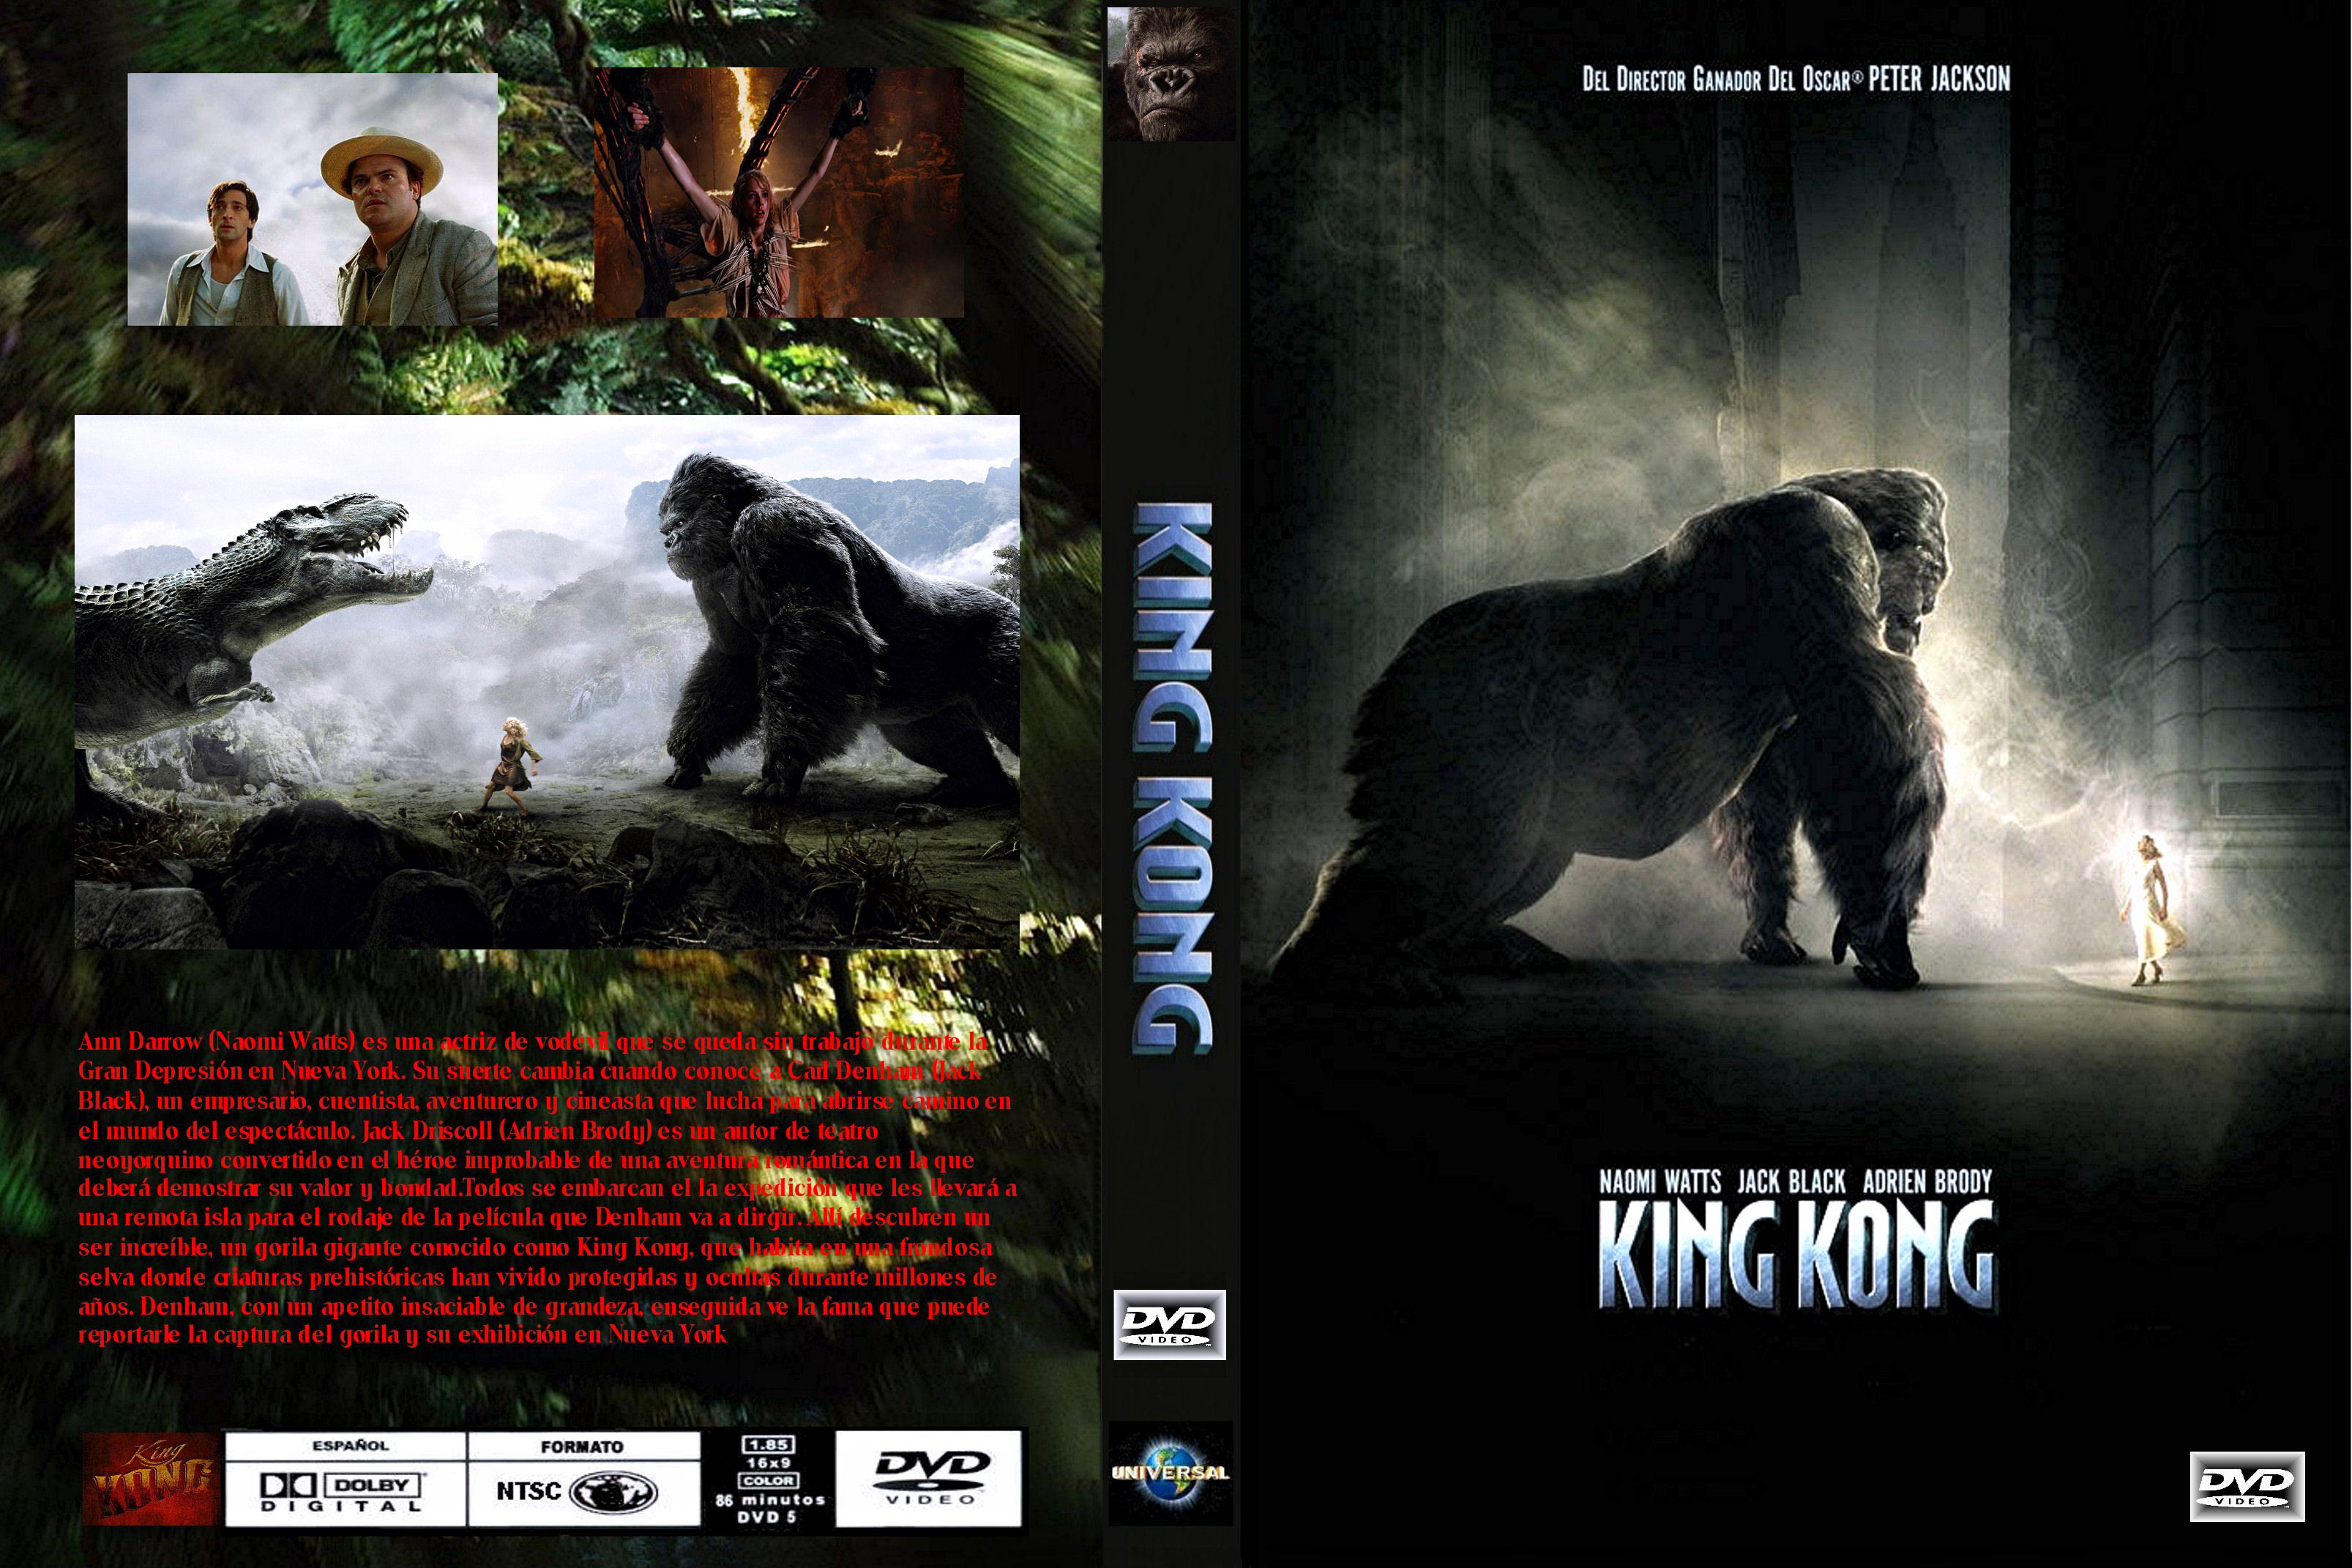 Kong full movie. Кинг Конг 2005 обложка. Кинг Конг 2005 Cover обложка. Кинг Конг King Kong (2005) Cover. Кинг Конг. 2005 DVD Cover обложка.